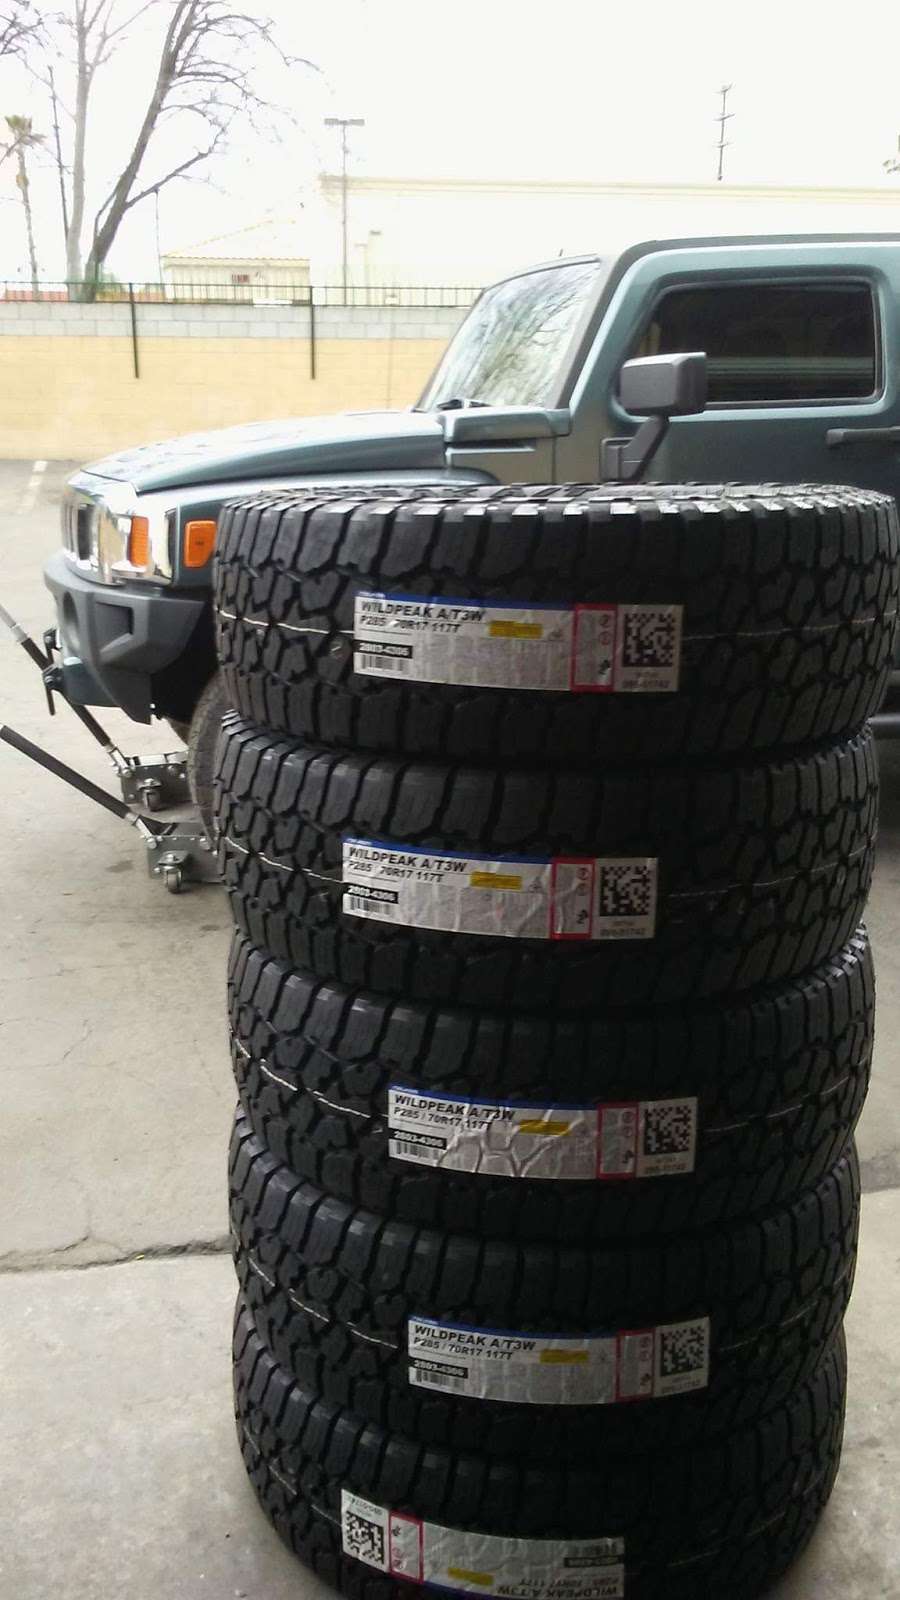 Gerrys Tires | 34557 Yucaipa Blvd d, Yucaipa, CA 92399, USA | Phone: (951) 350-2201